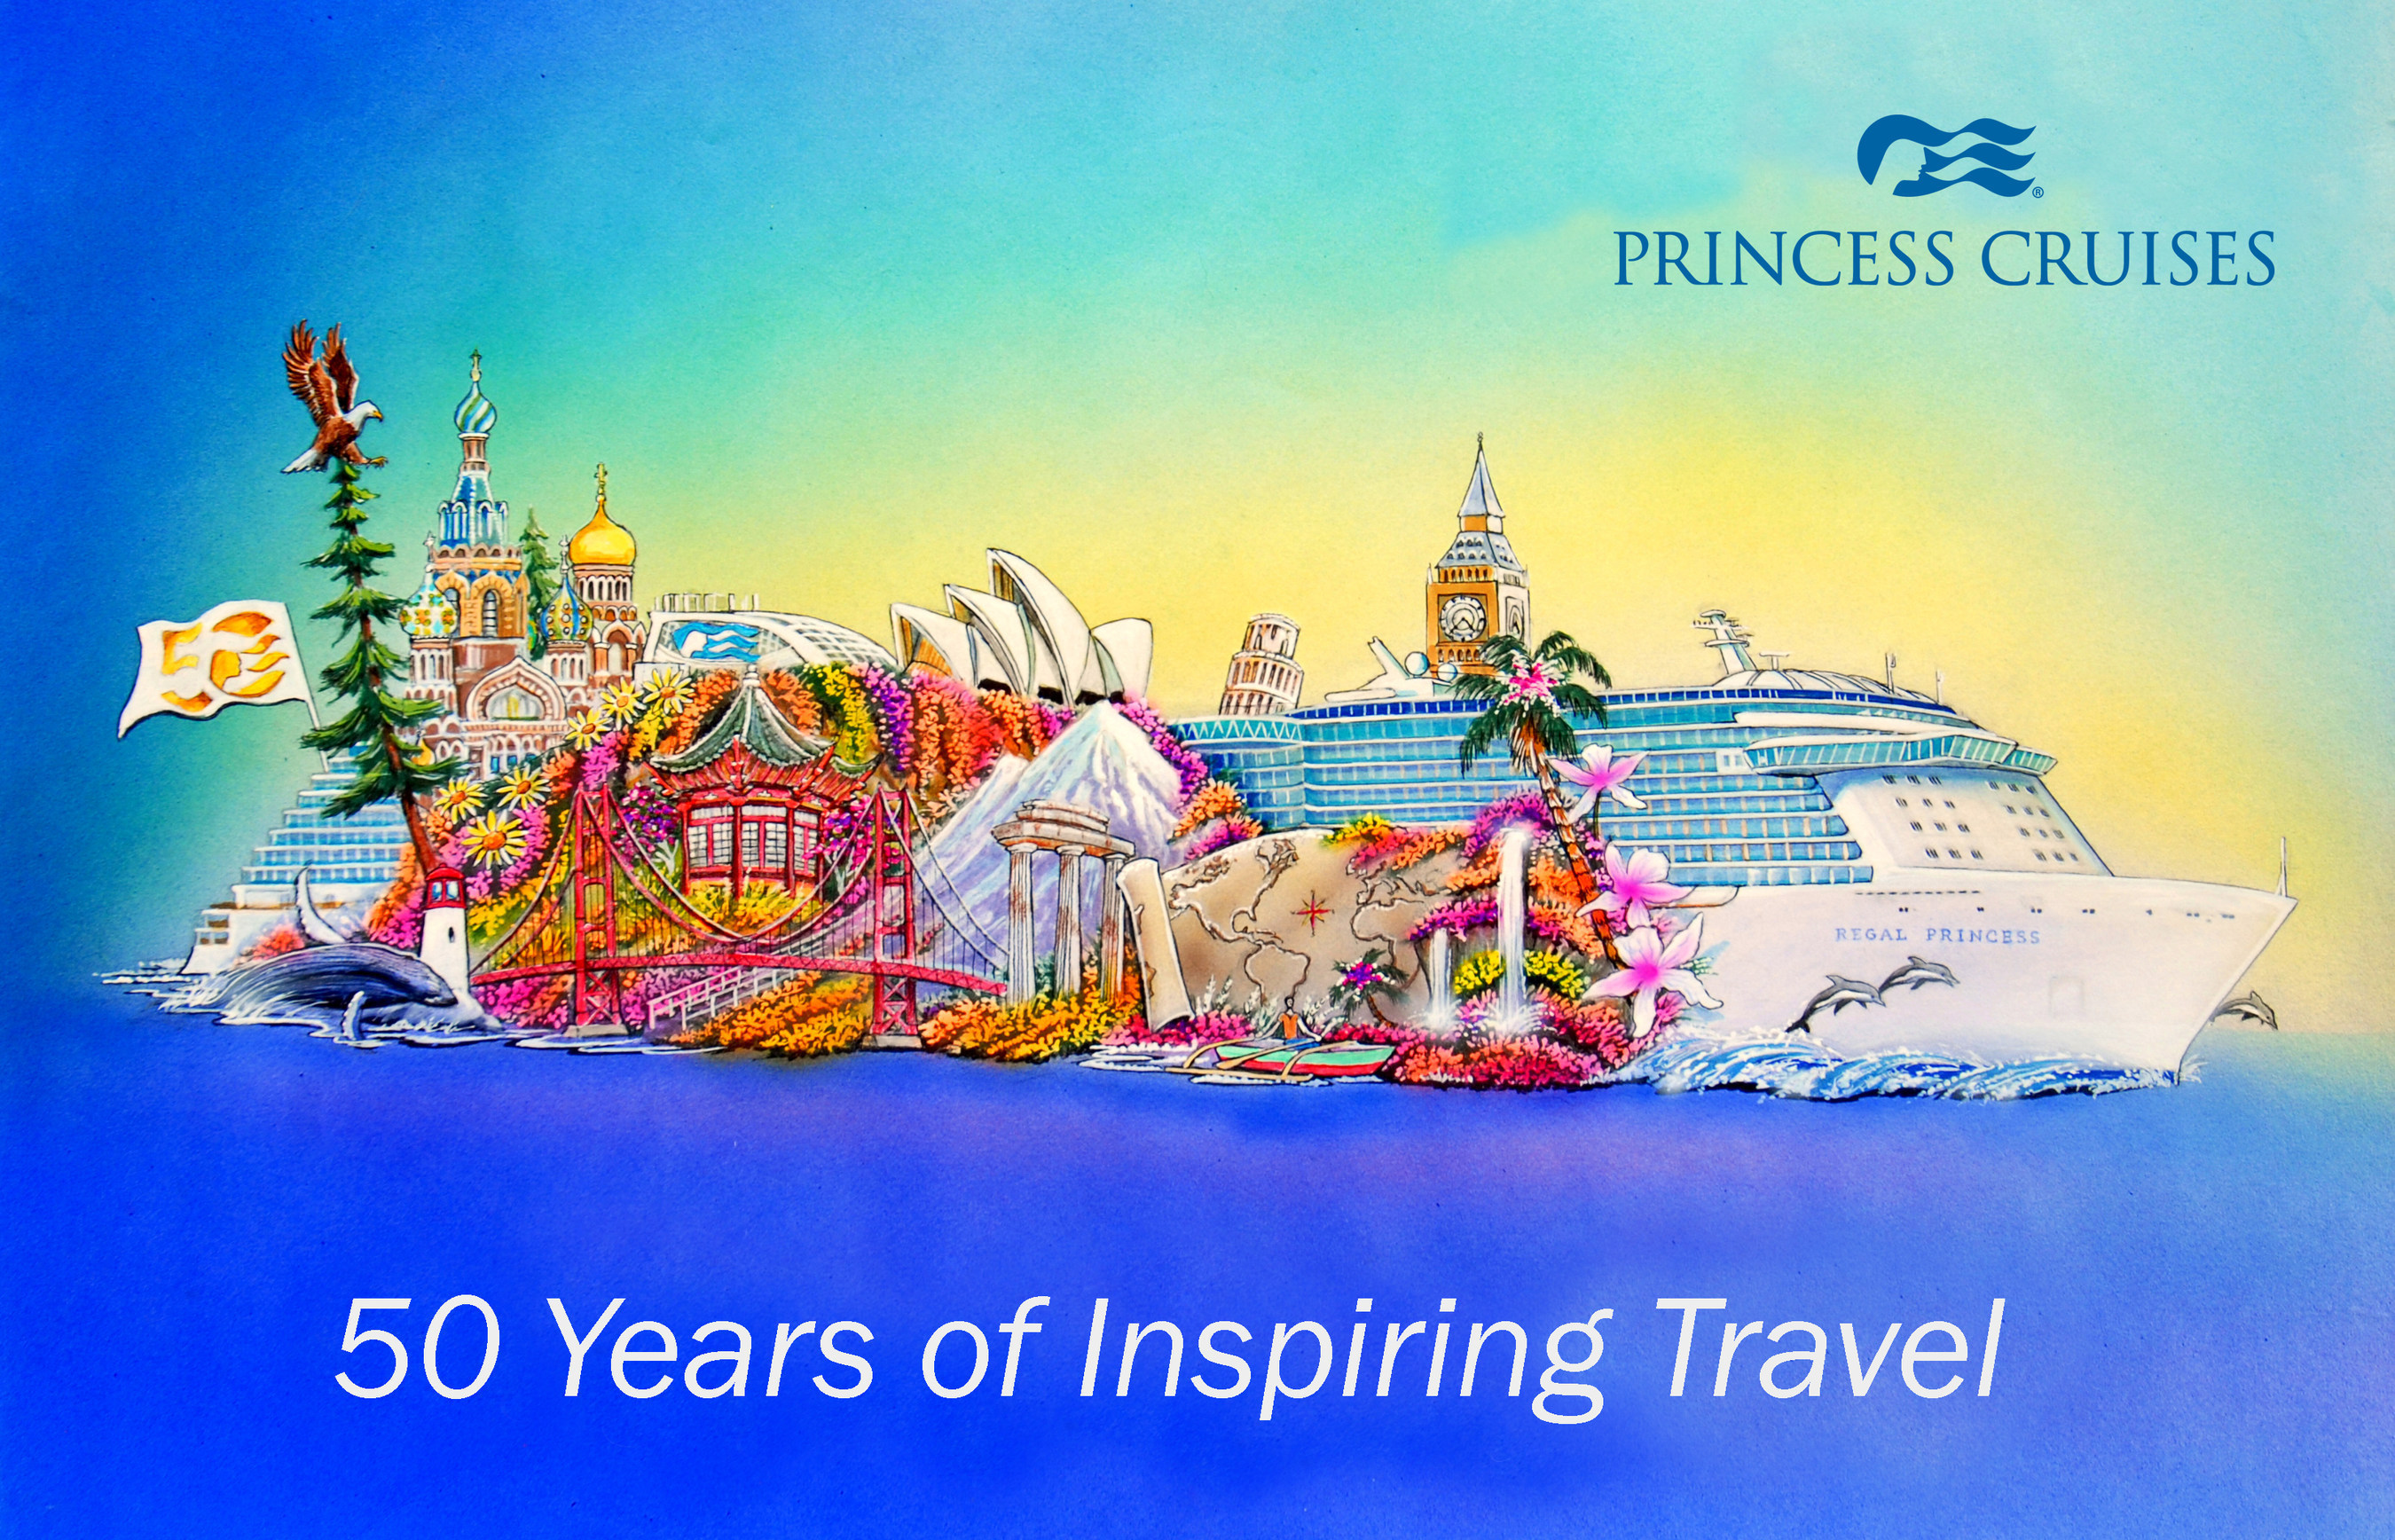 A rendering of Princess Cruises' first-ever Rose Parade float. (PRNewsFoto/Princess Cruises)